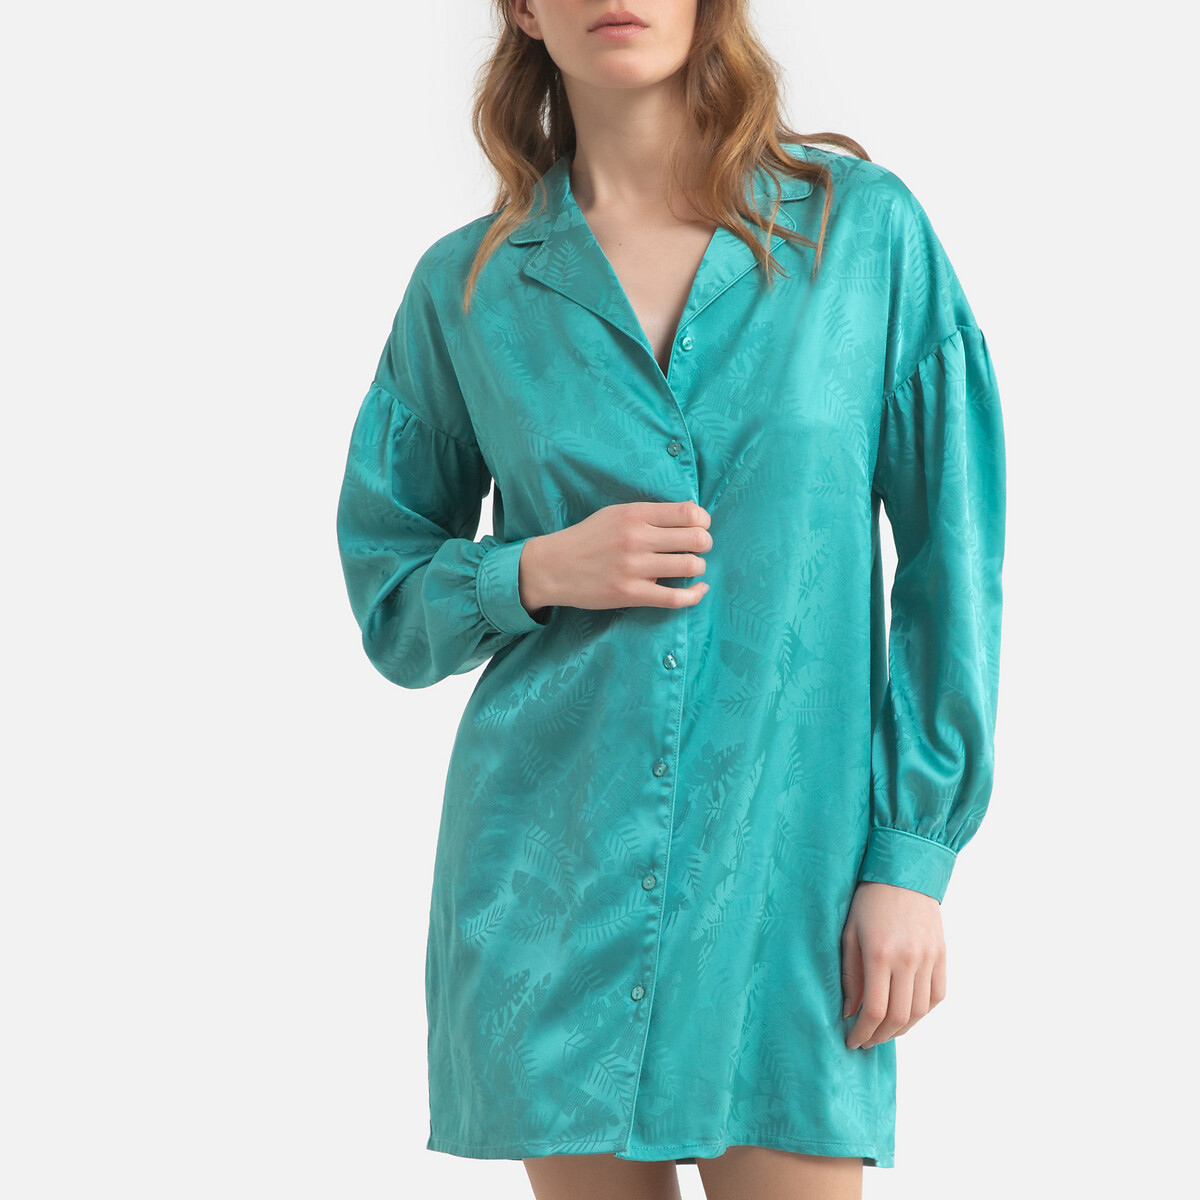 Ночная LaRedoute Рубашка в форме пижамы из сатина 44 (FR) - 50 (RUS) зеленый, размер 44 (FR) - 50 (RUS) Рубашка в форме пижамы из сатина 44 (FR) - 50 (RUS) зеленый - фото 1